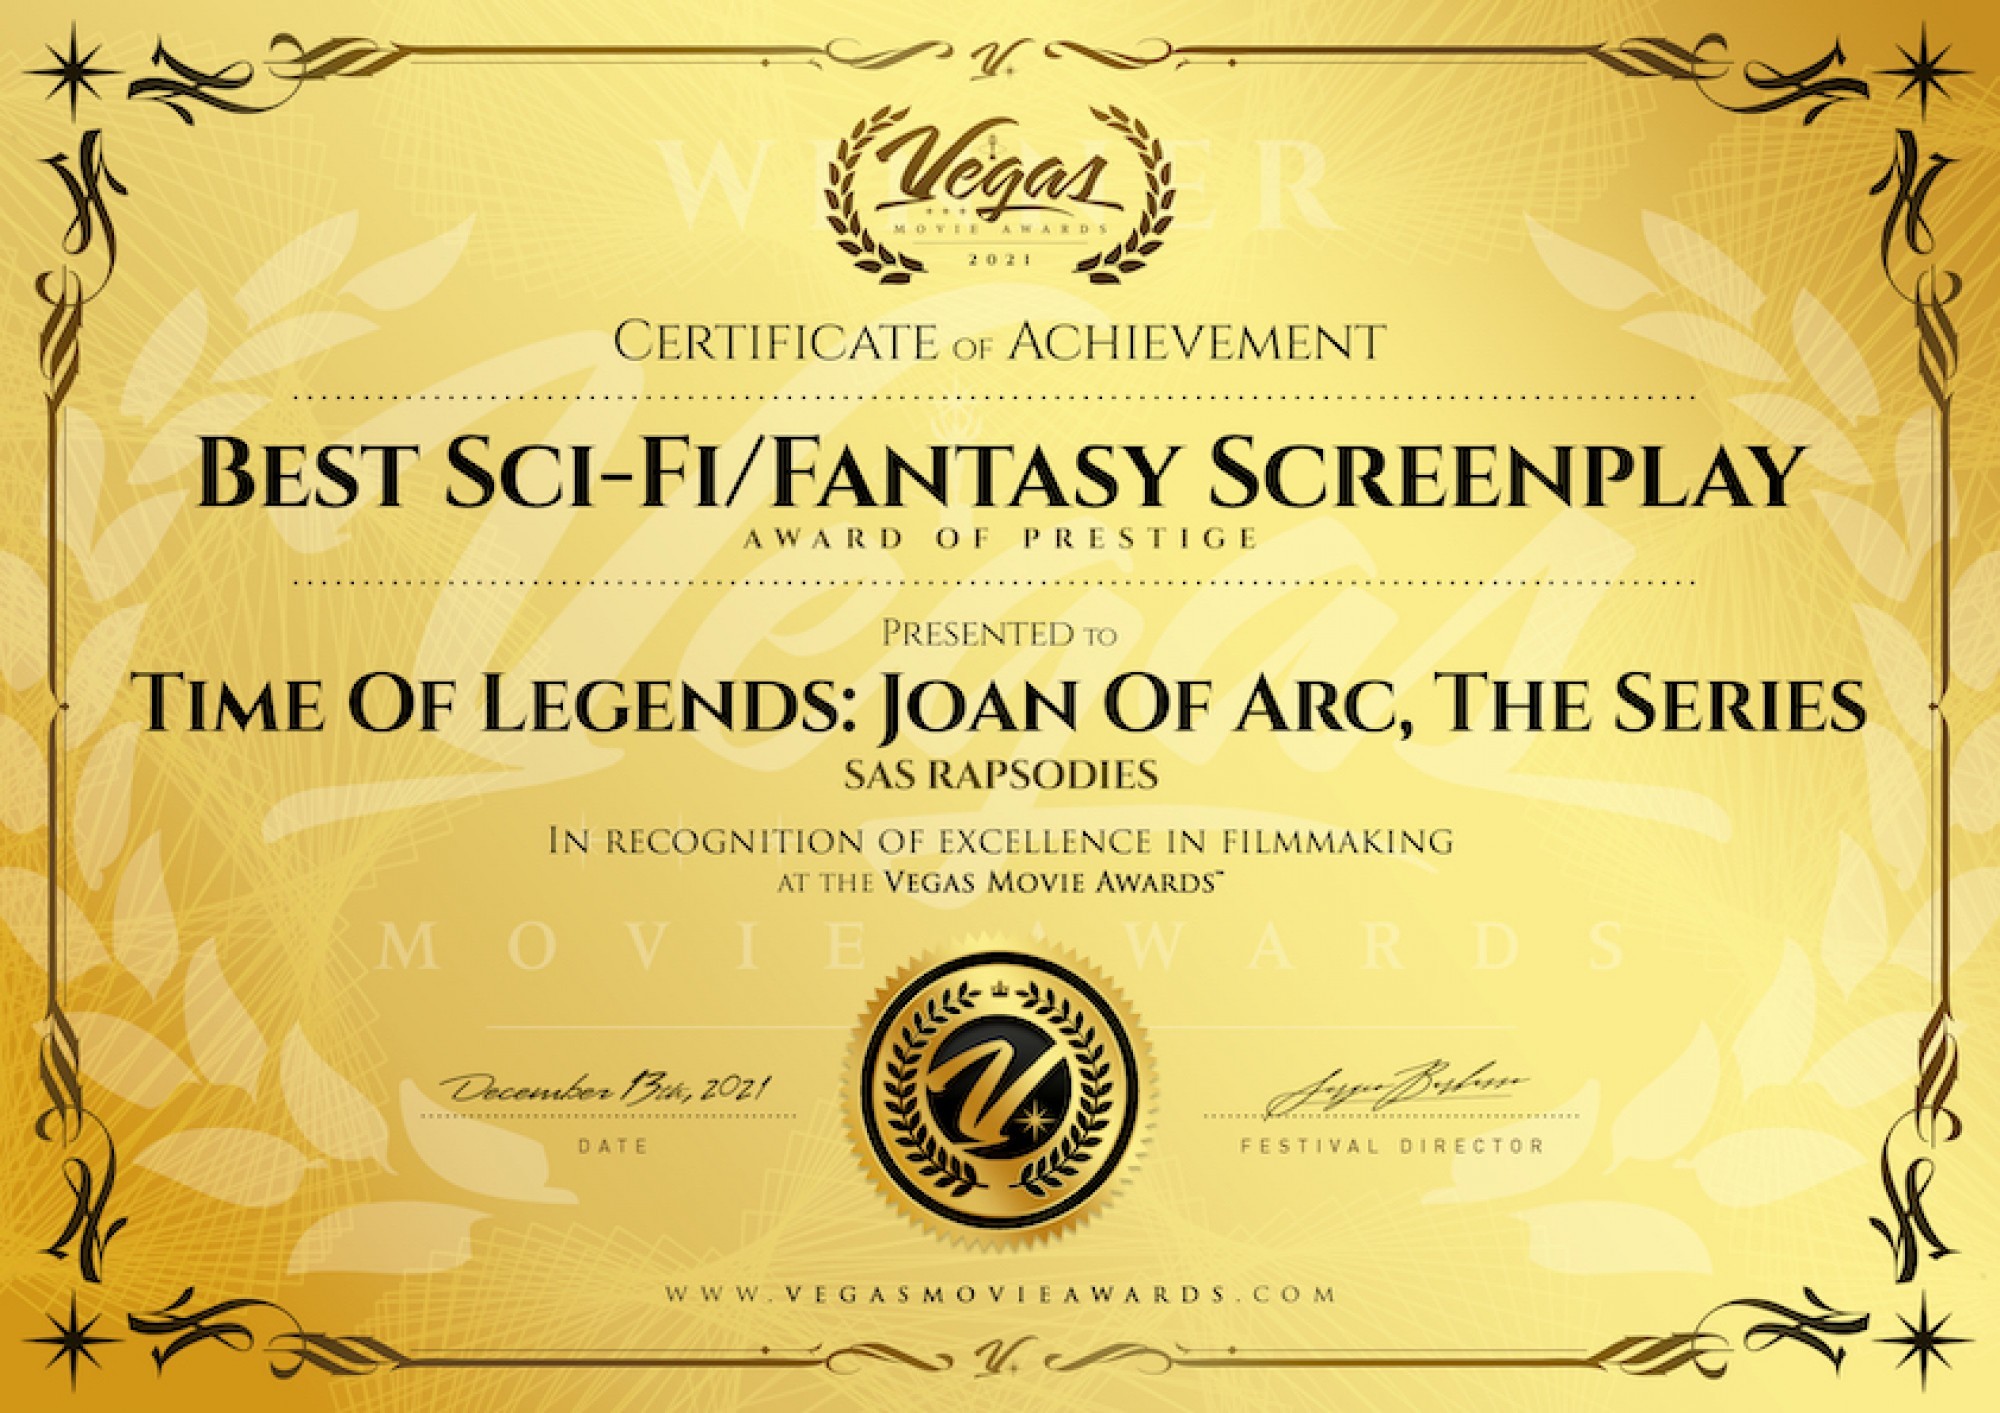 Joan of Arc: The Series - Best Sci-Fi/Fantasy Screenplay